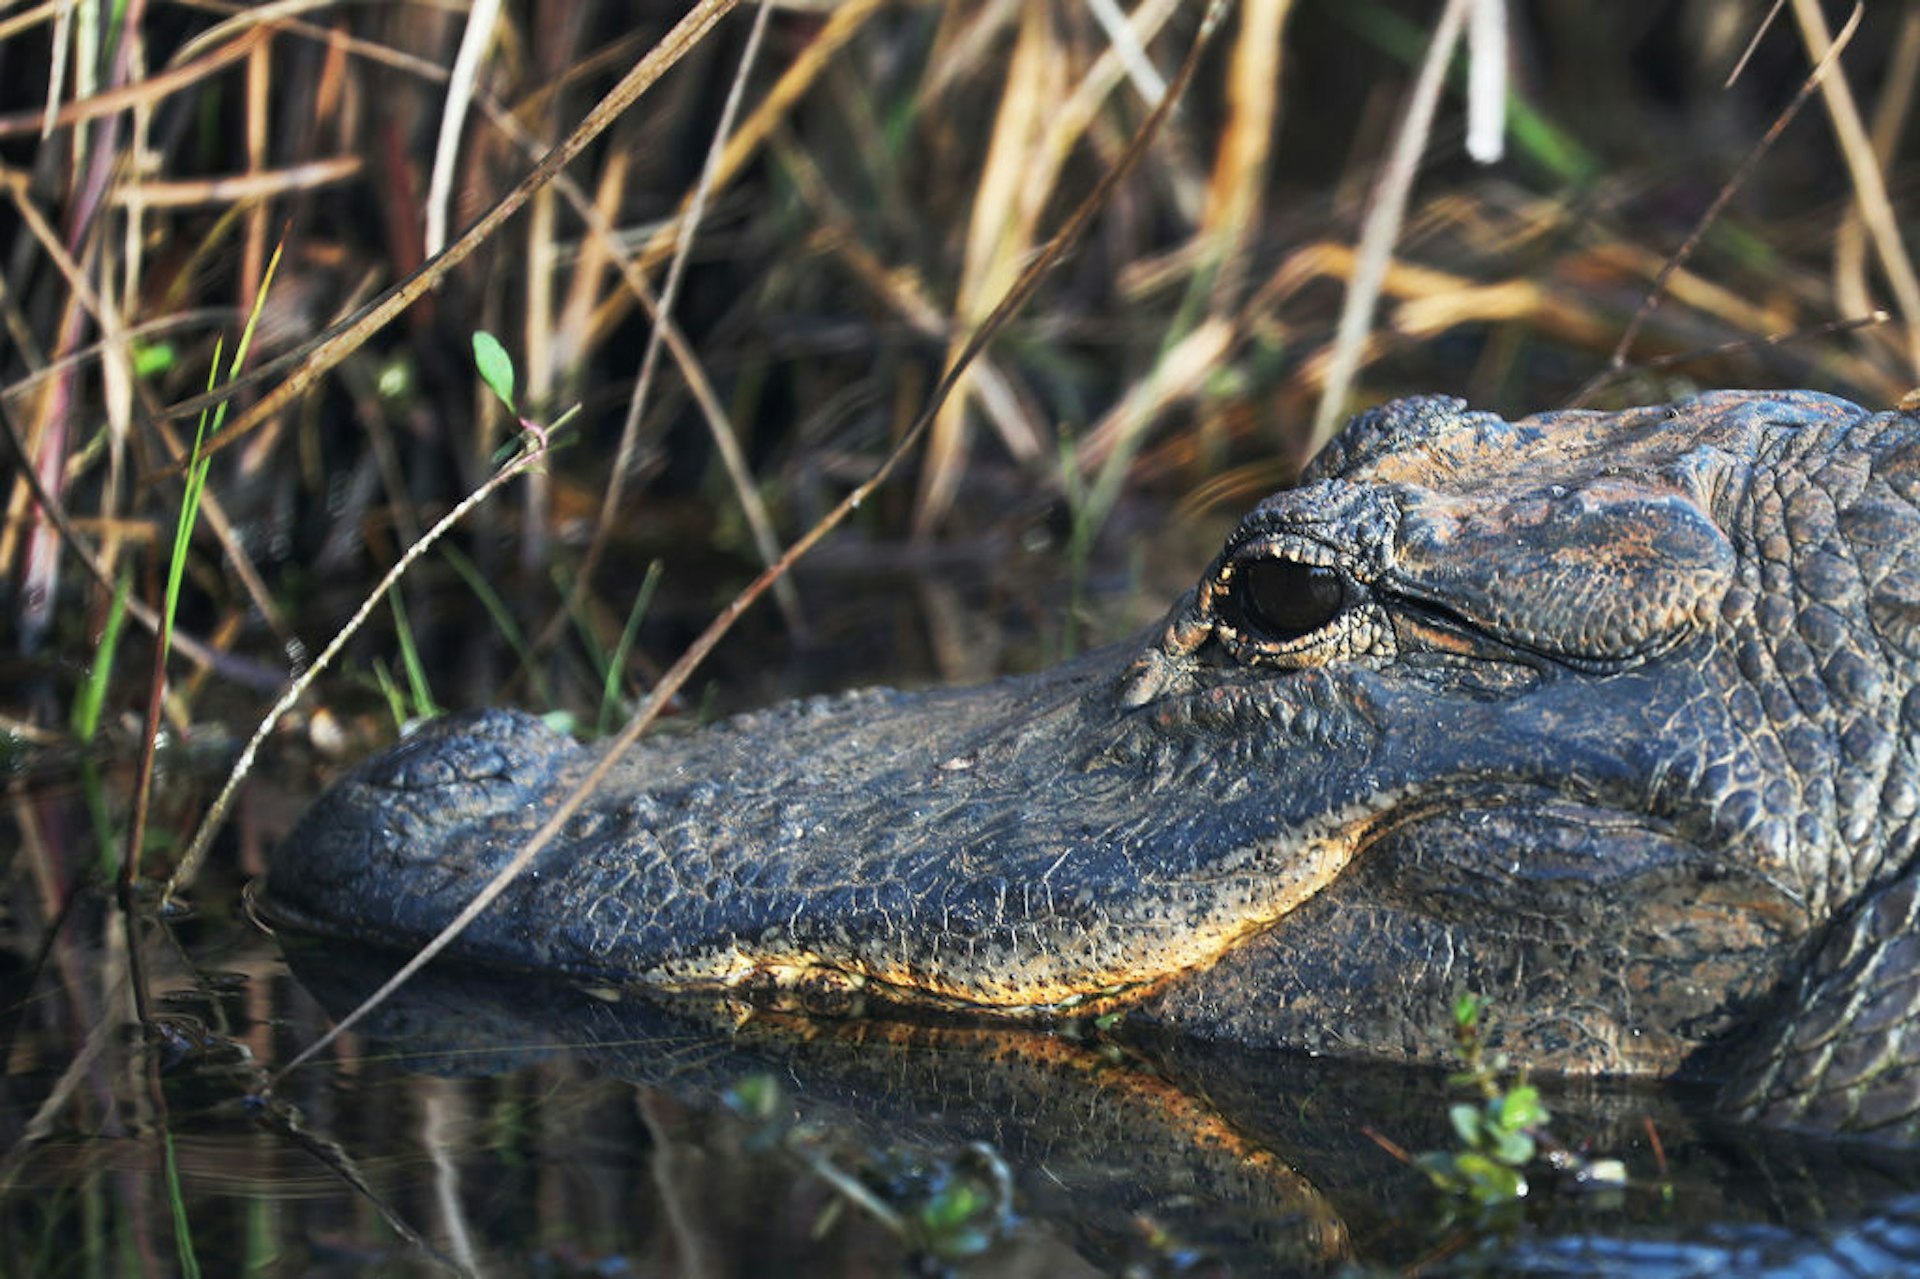 Closeup of an alligator's head peeking through the reeds in the swamp